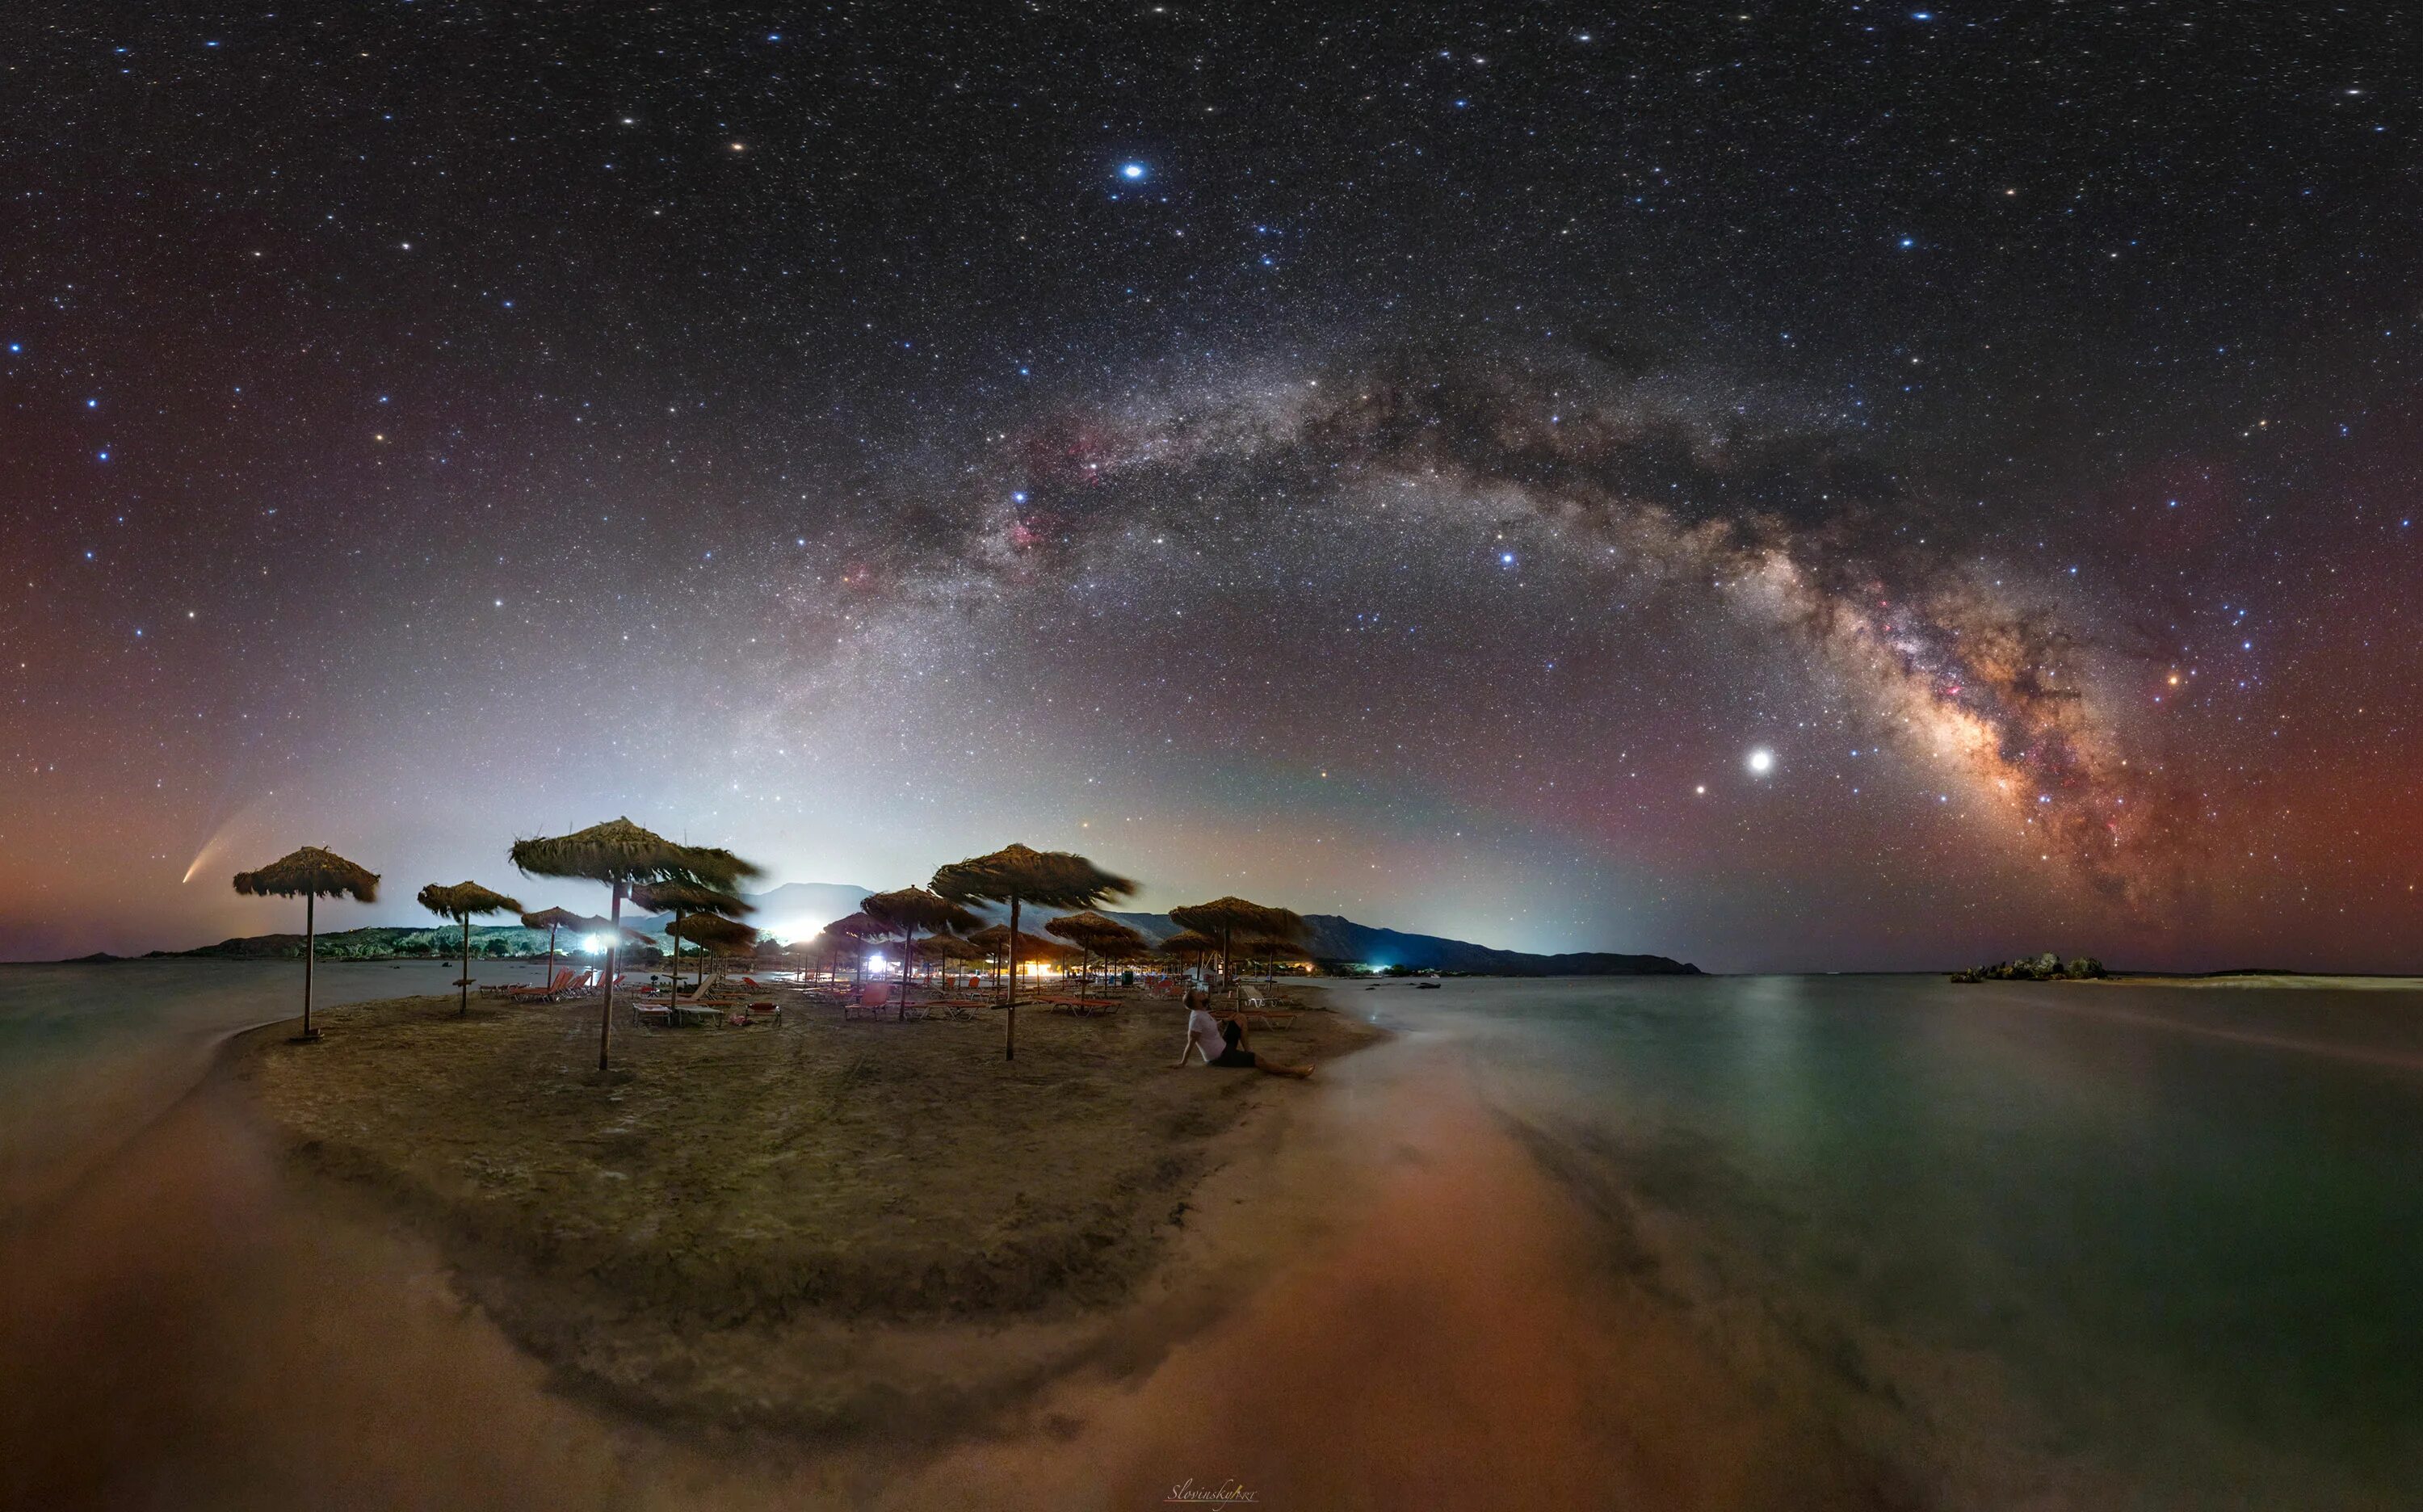 Звездное небо астронет. Звездное небо над Грецией. Пейзажное Астрофото. Панорамные пейзажи космоса. Астронет.